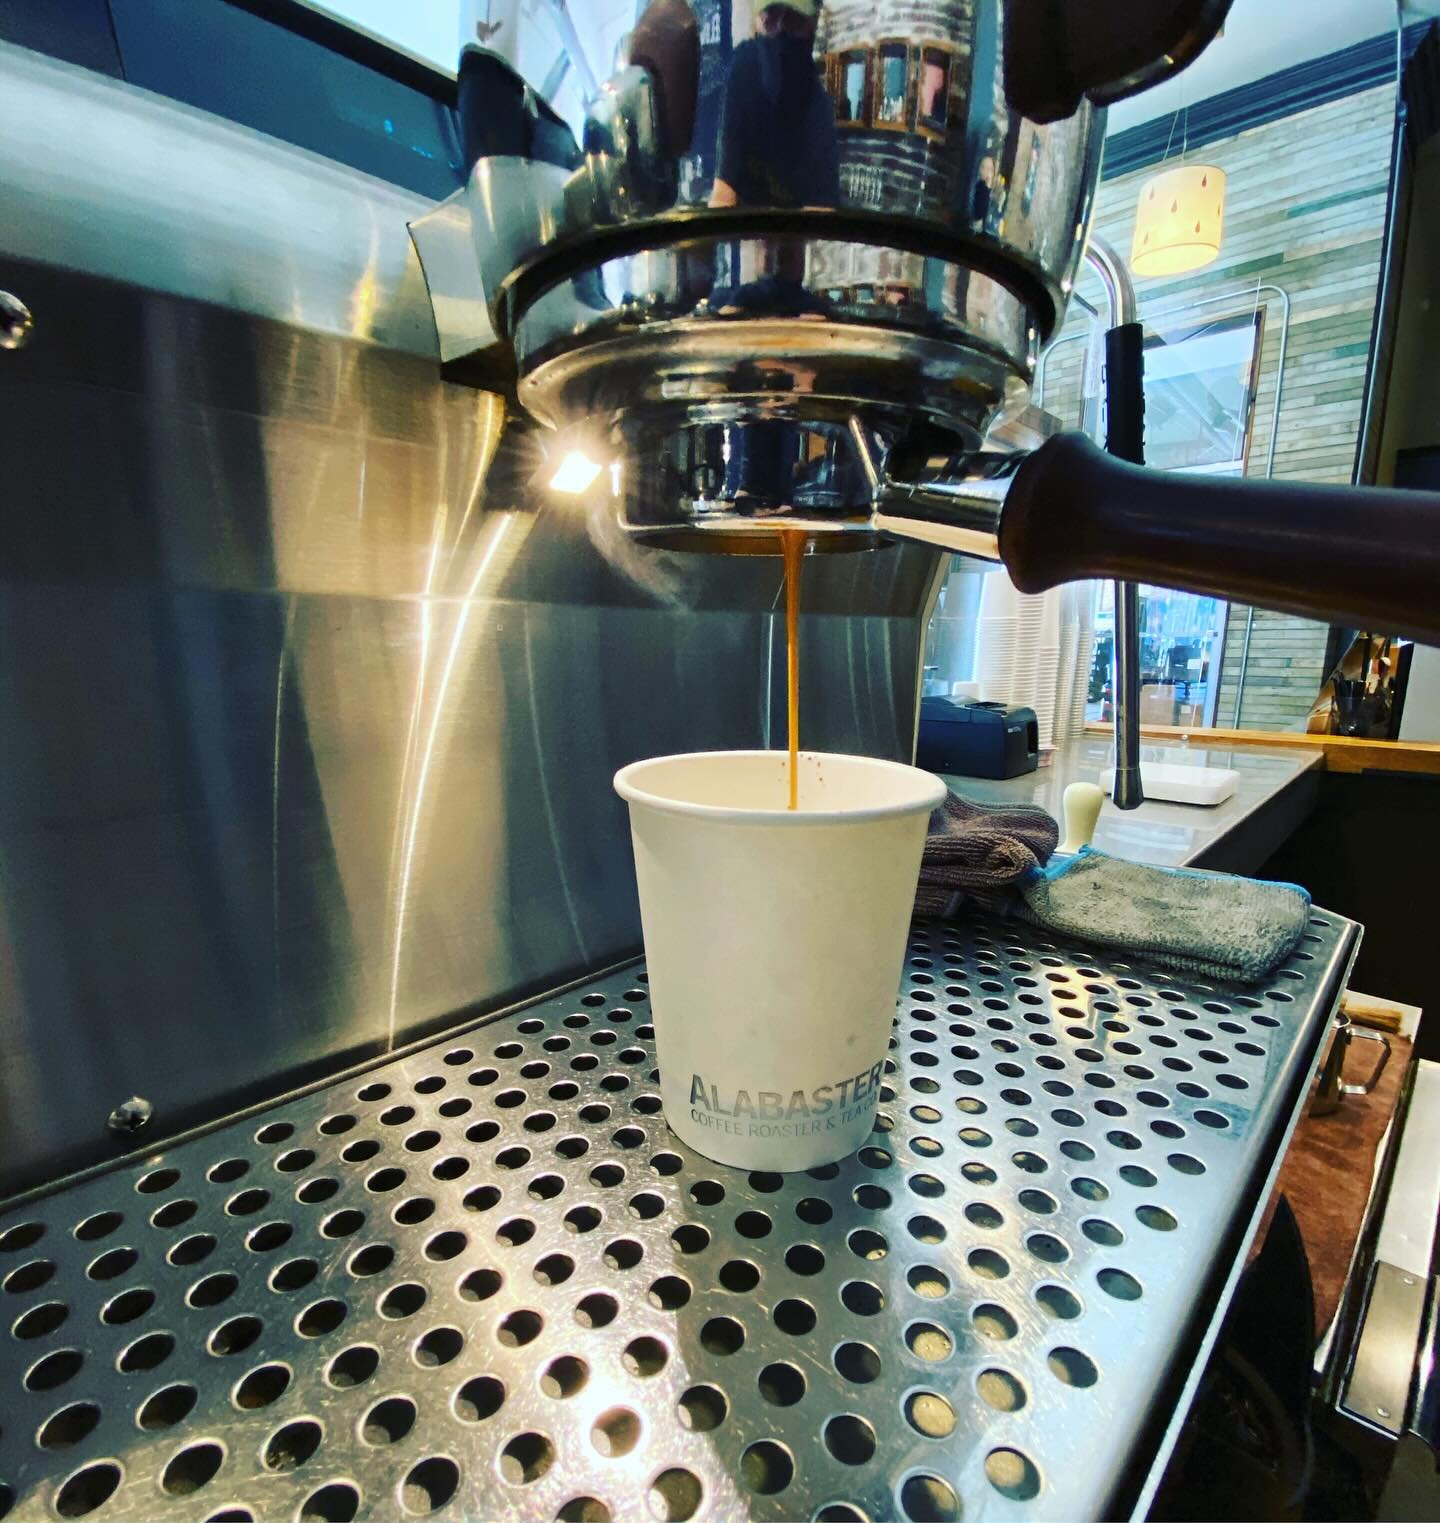 Saturday fuel ☕️
_
#alabastercoffee #williamsport #coffee